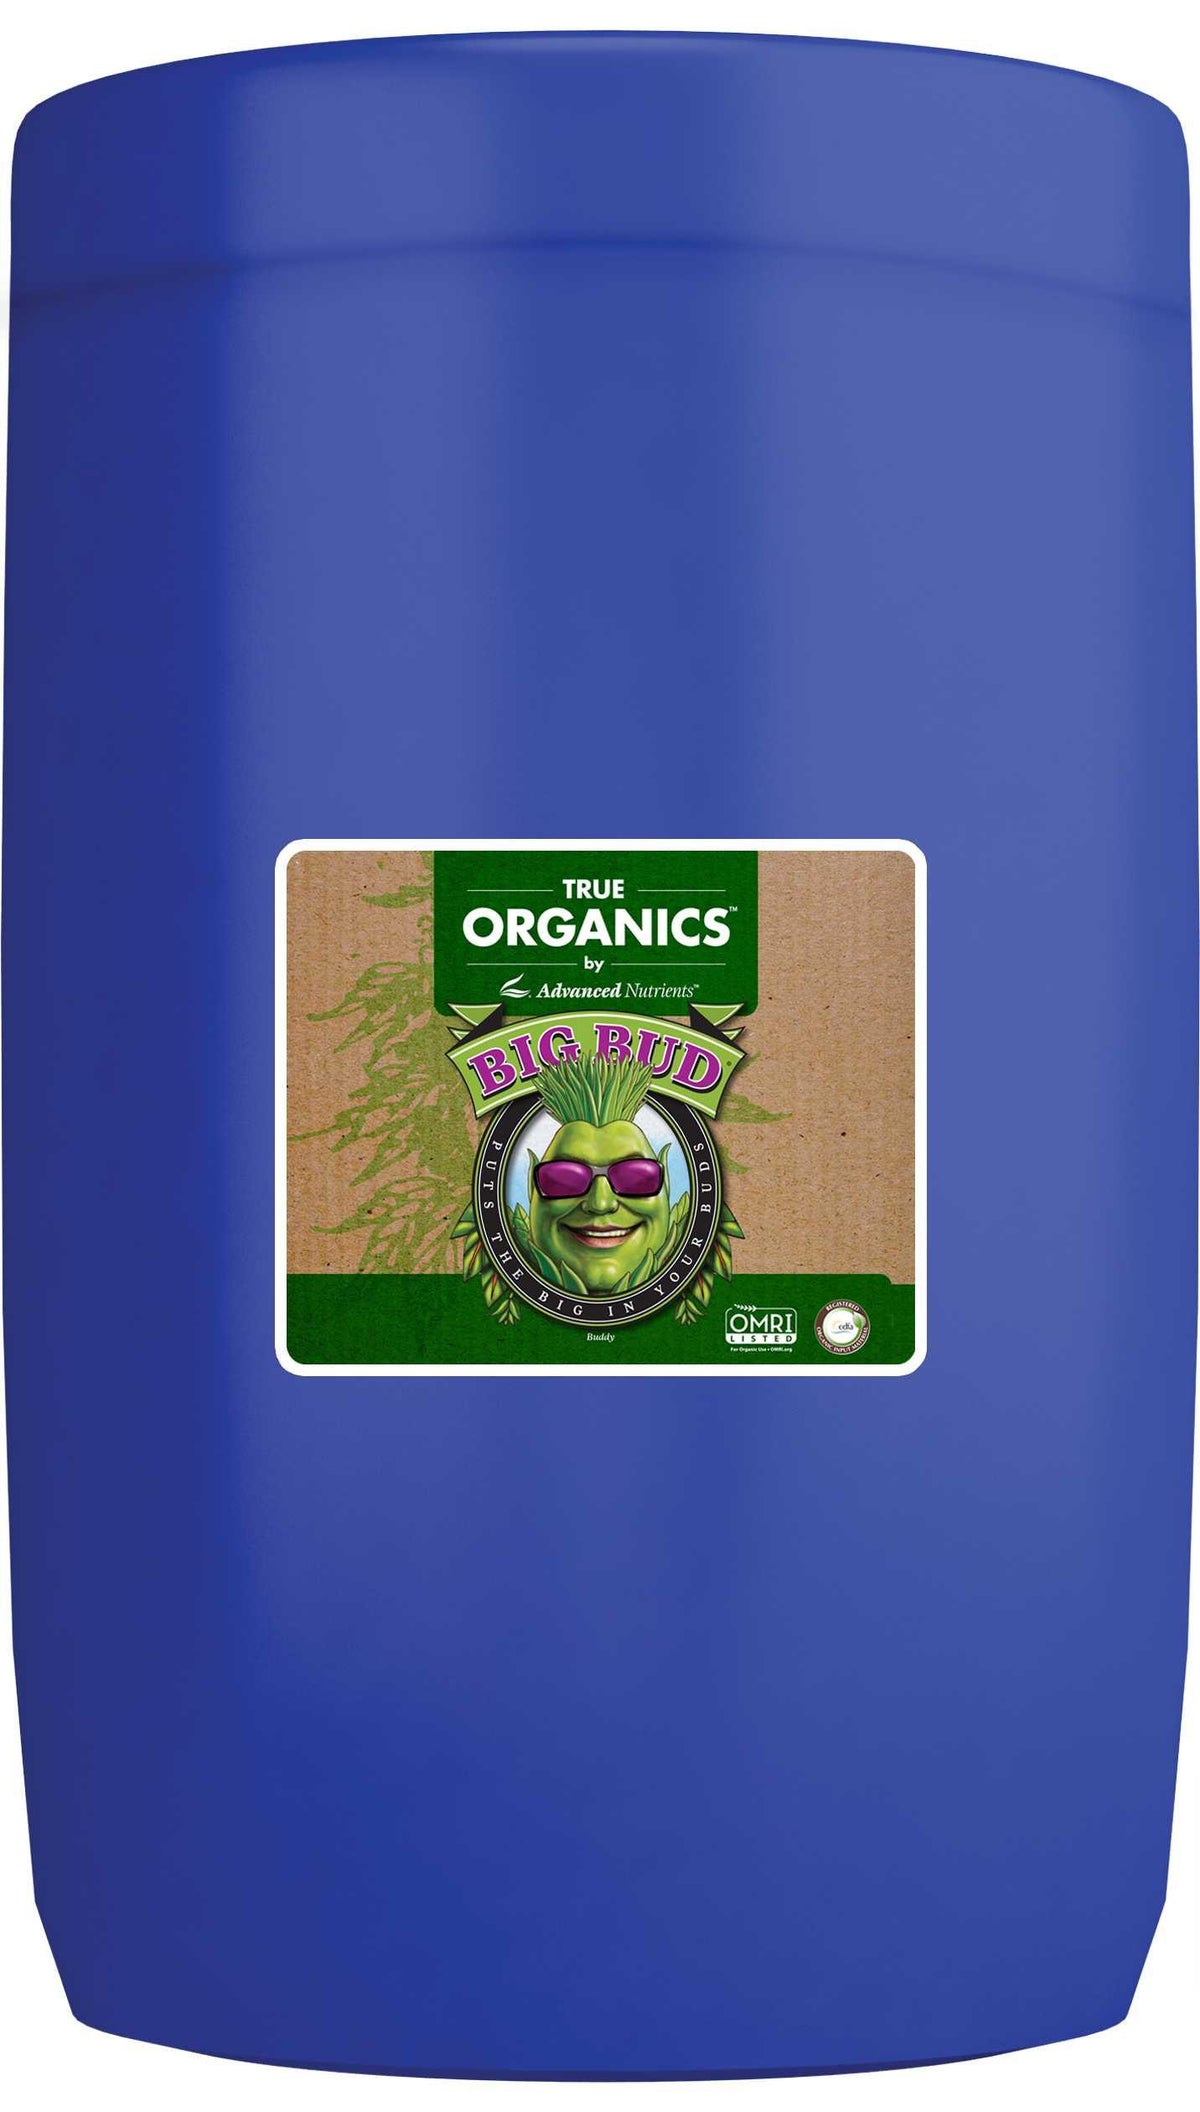 Advanced Nutrients B. B.® OG Organics Advanced Nutrients